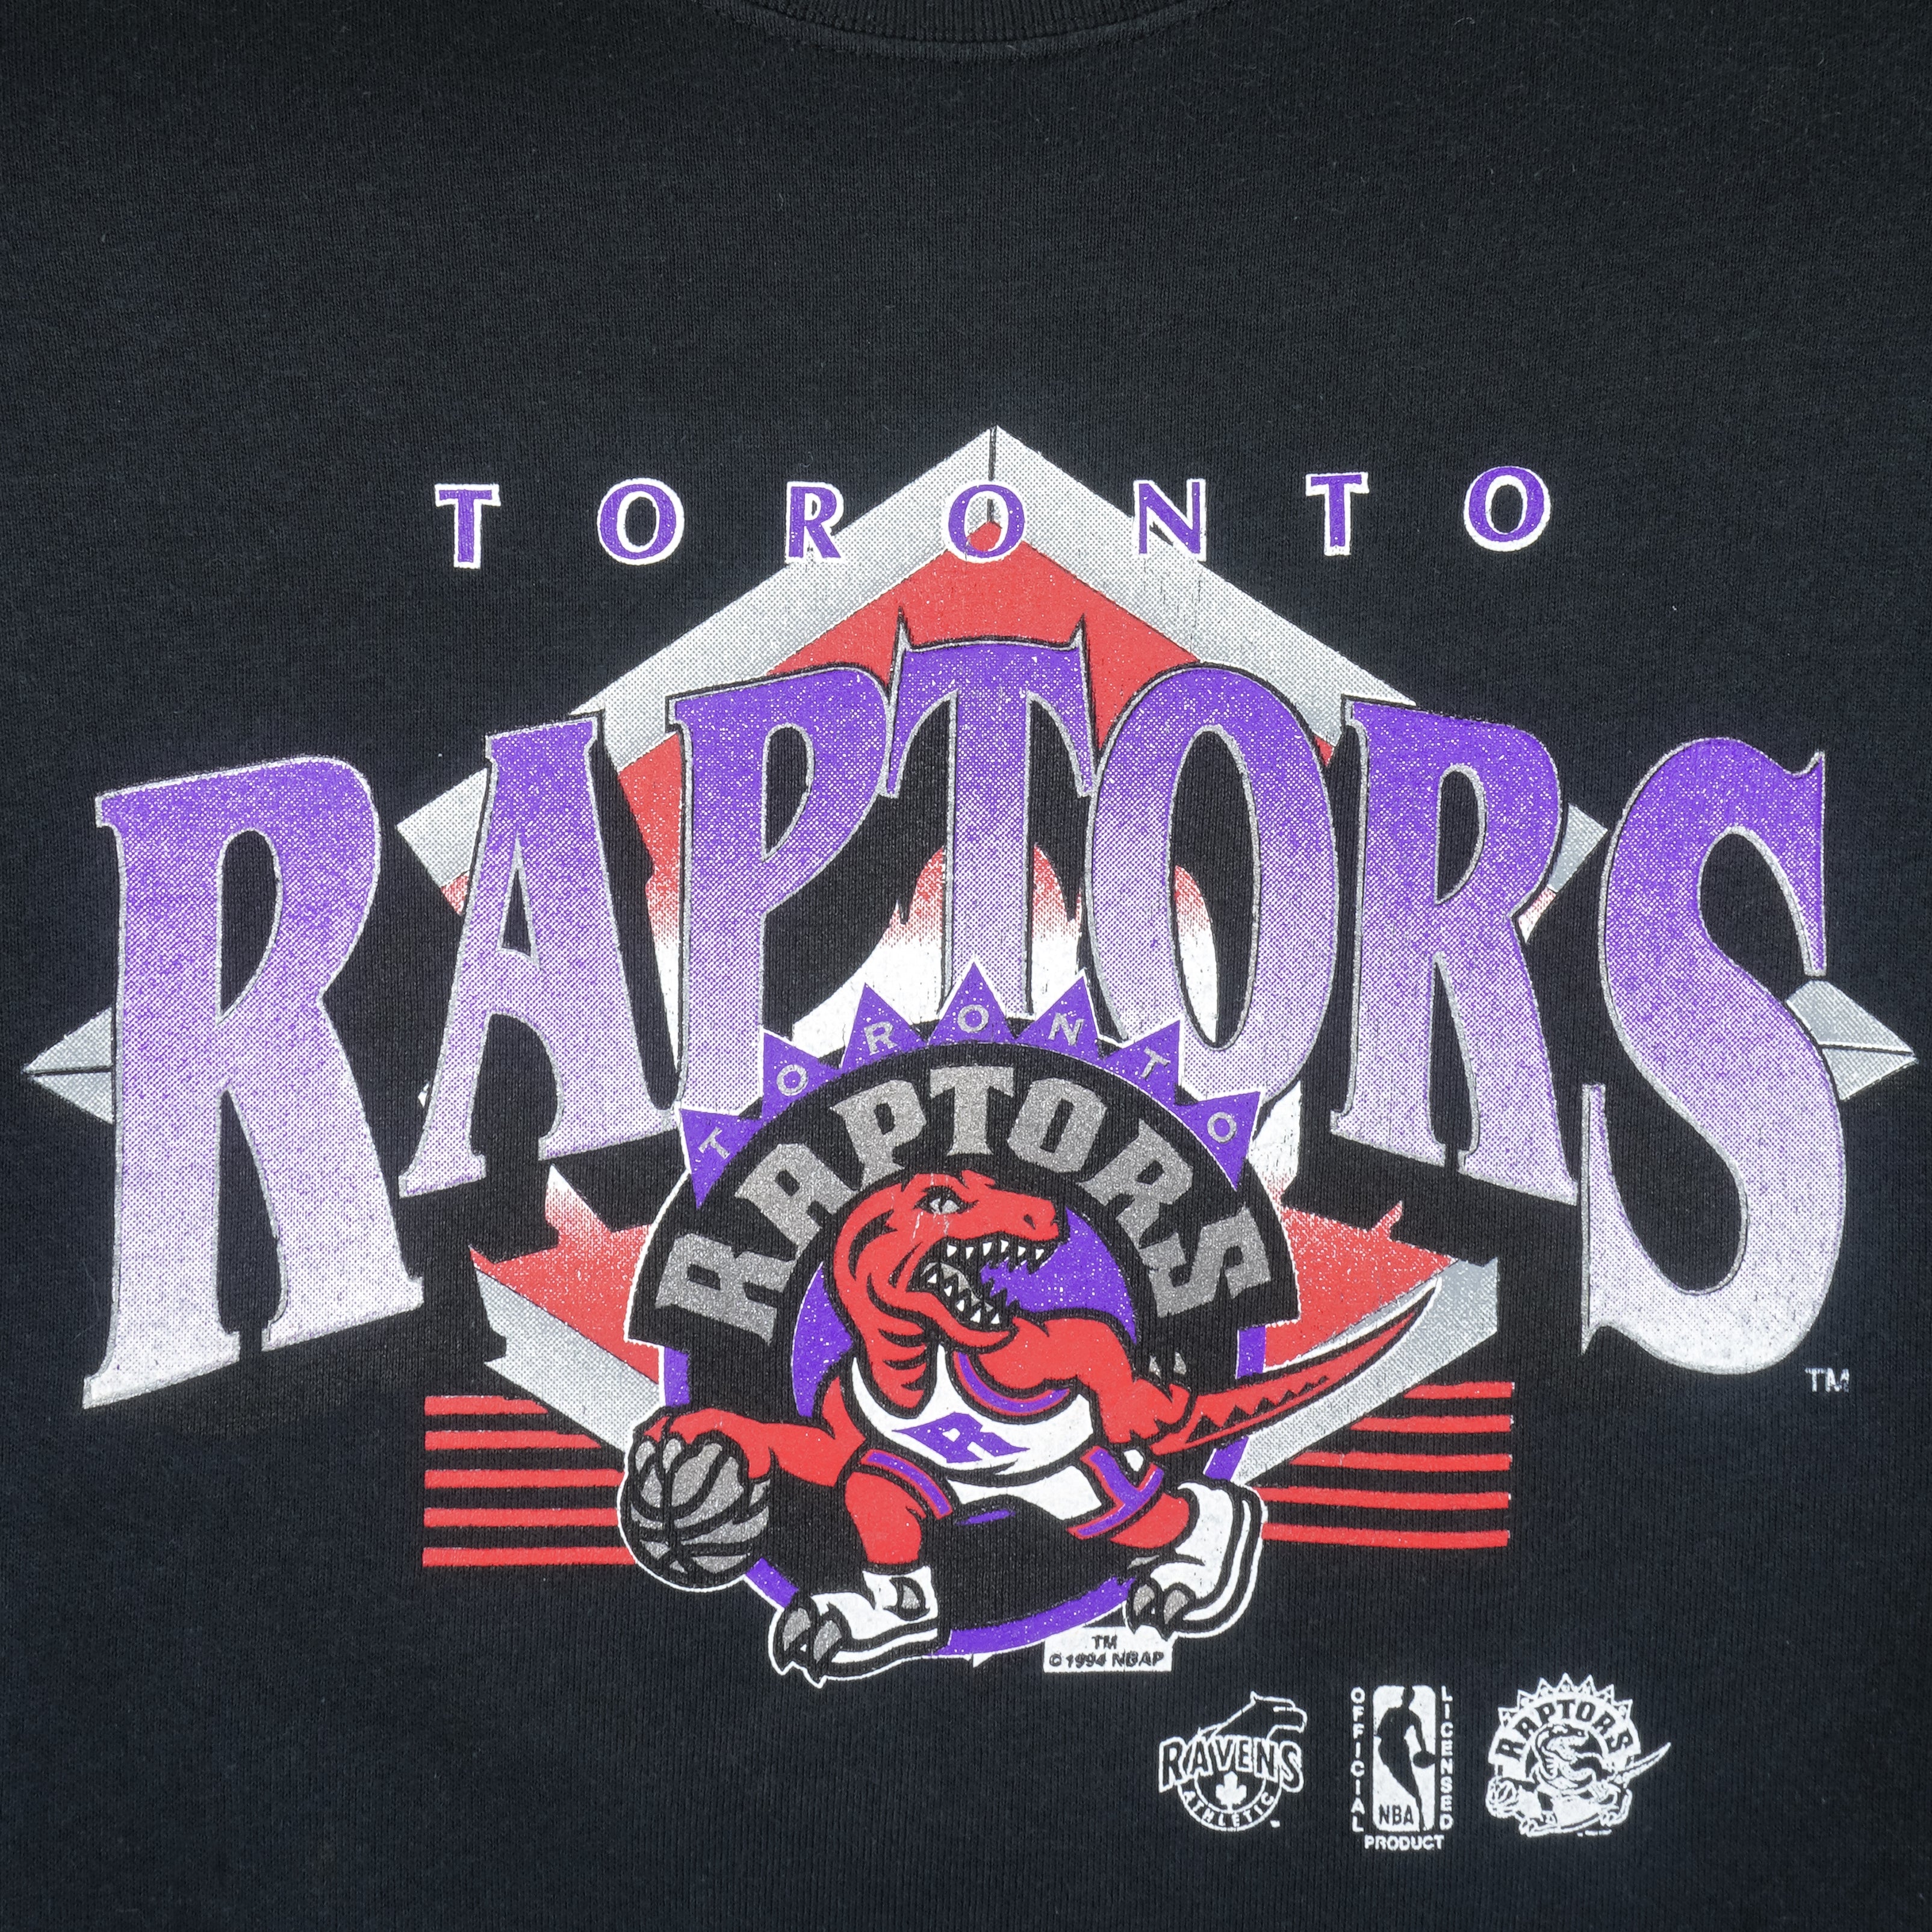 Vintage 1990s Toronto Raptors NBA Basketball Purple Sweatshirt 